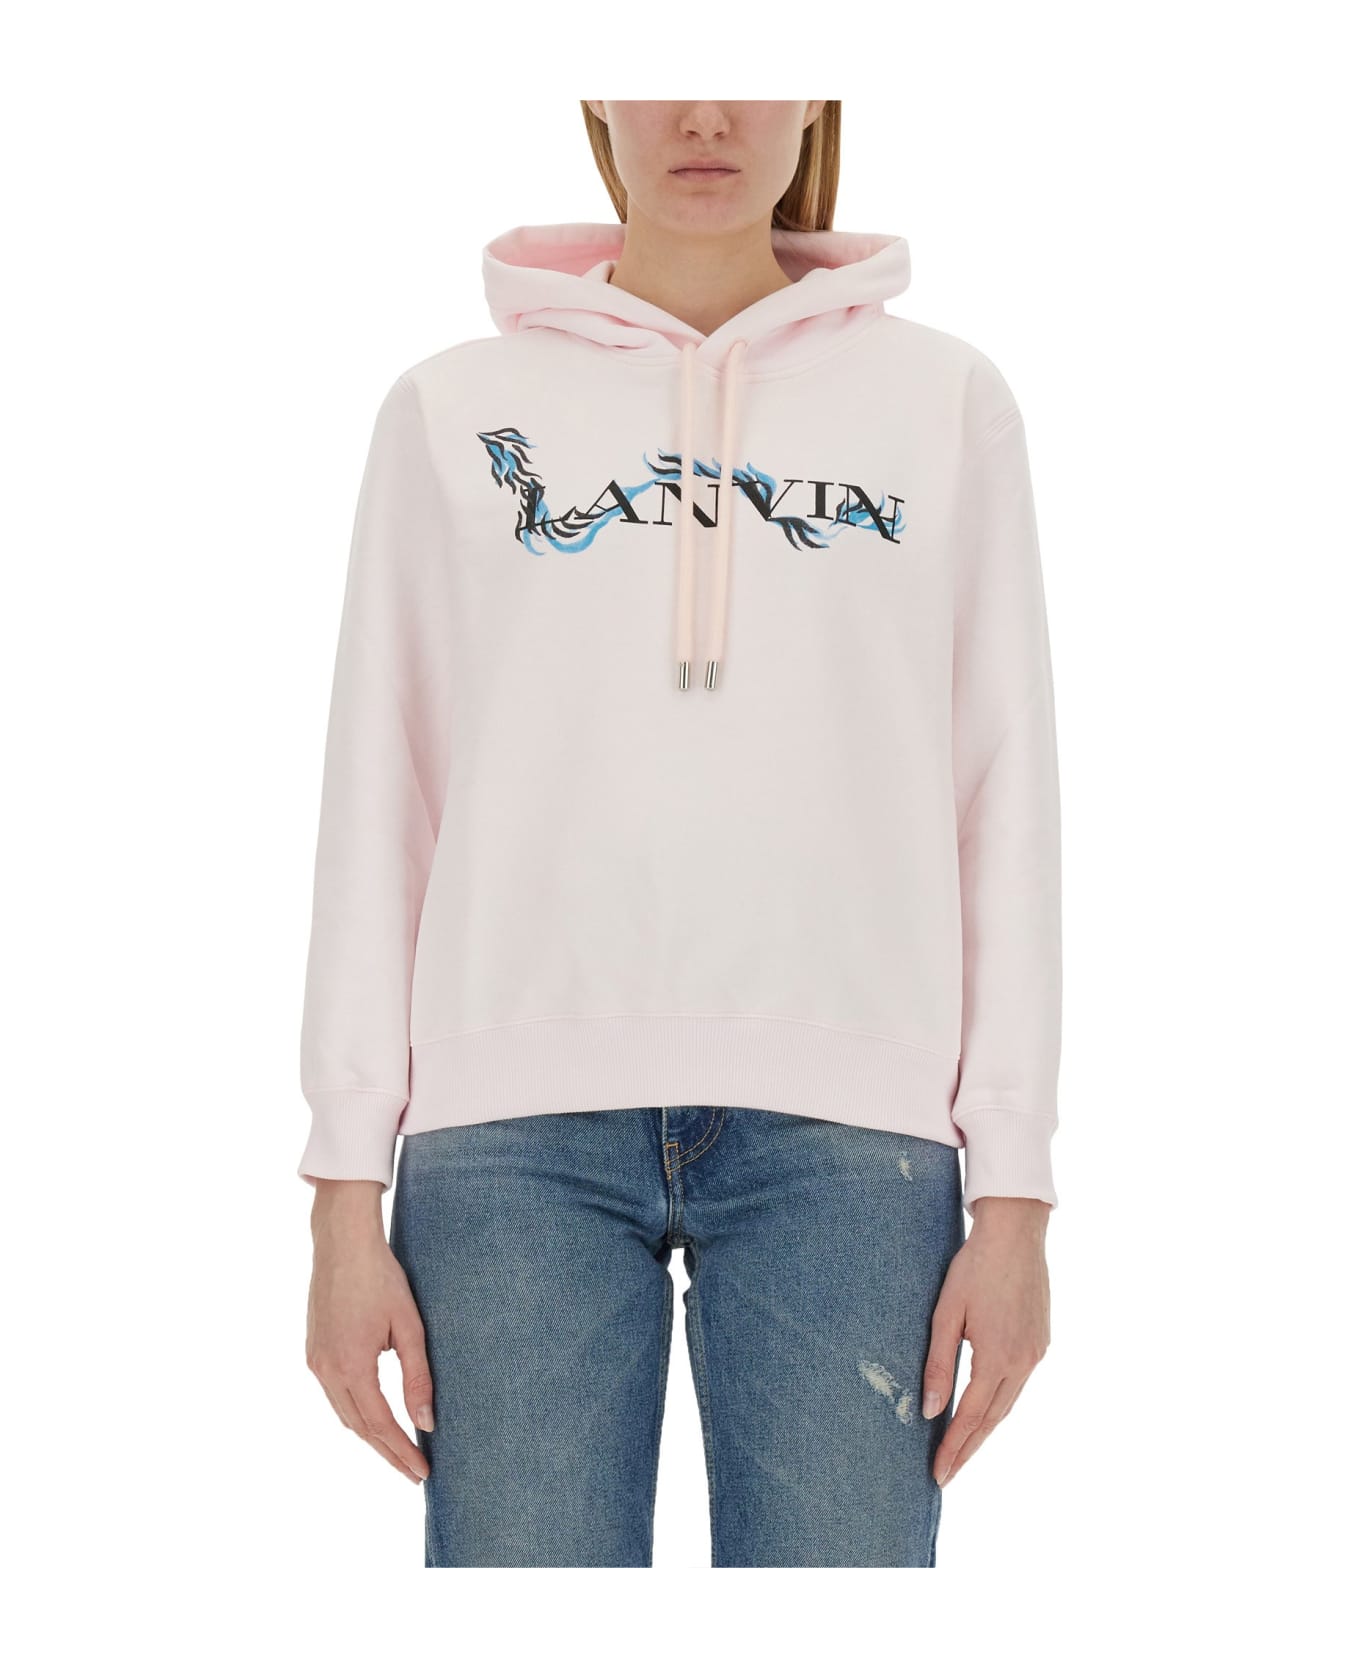 Lanvin Sweatshirt With Print